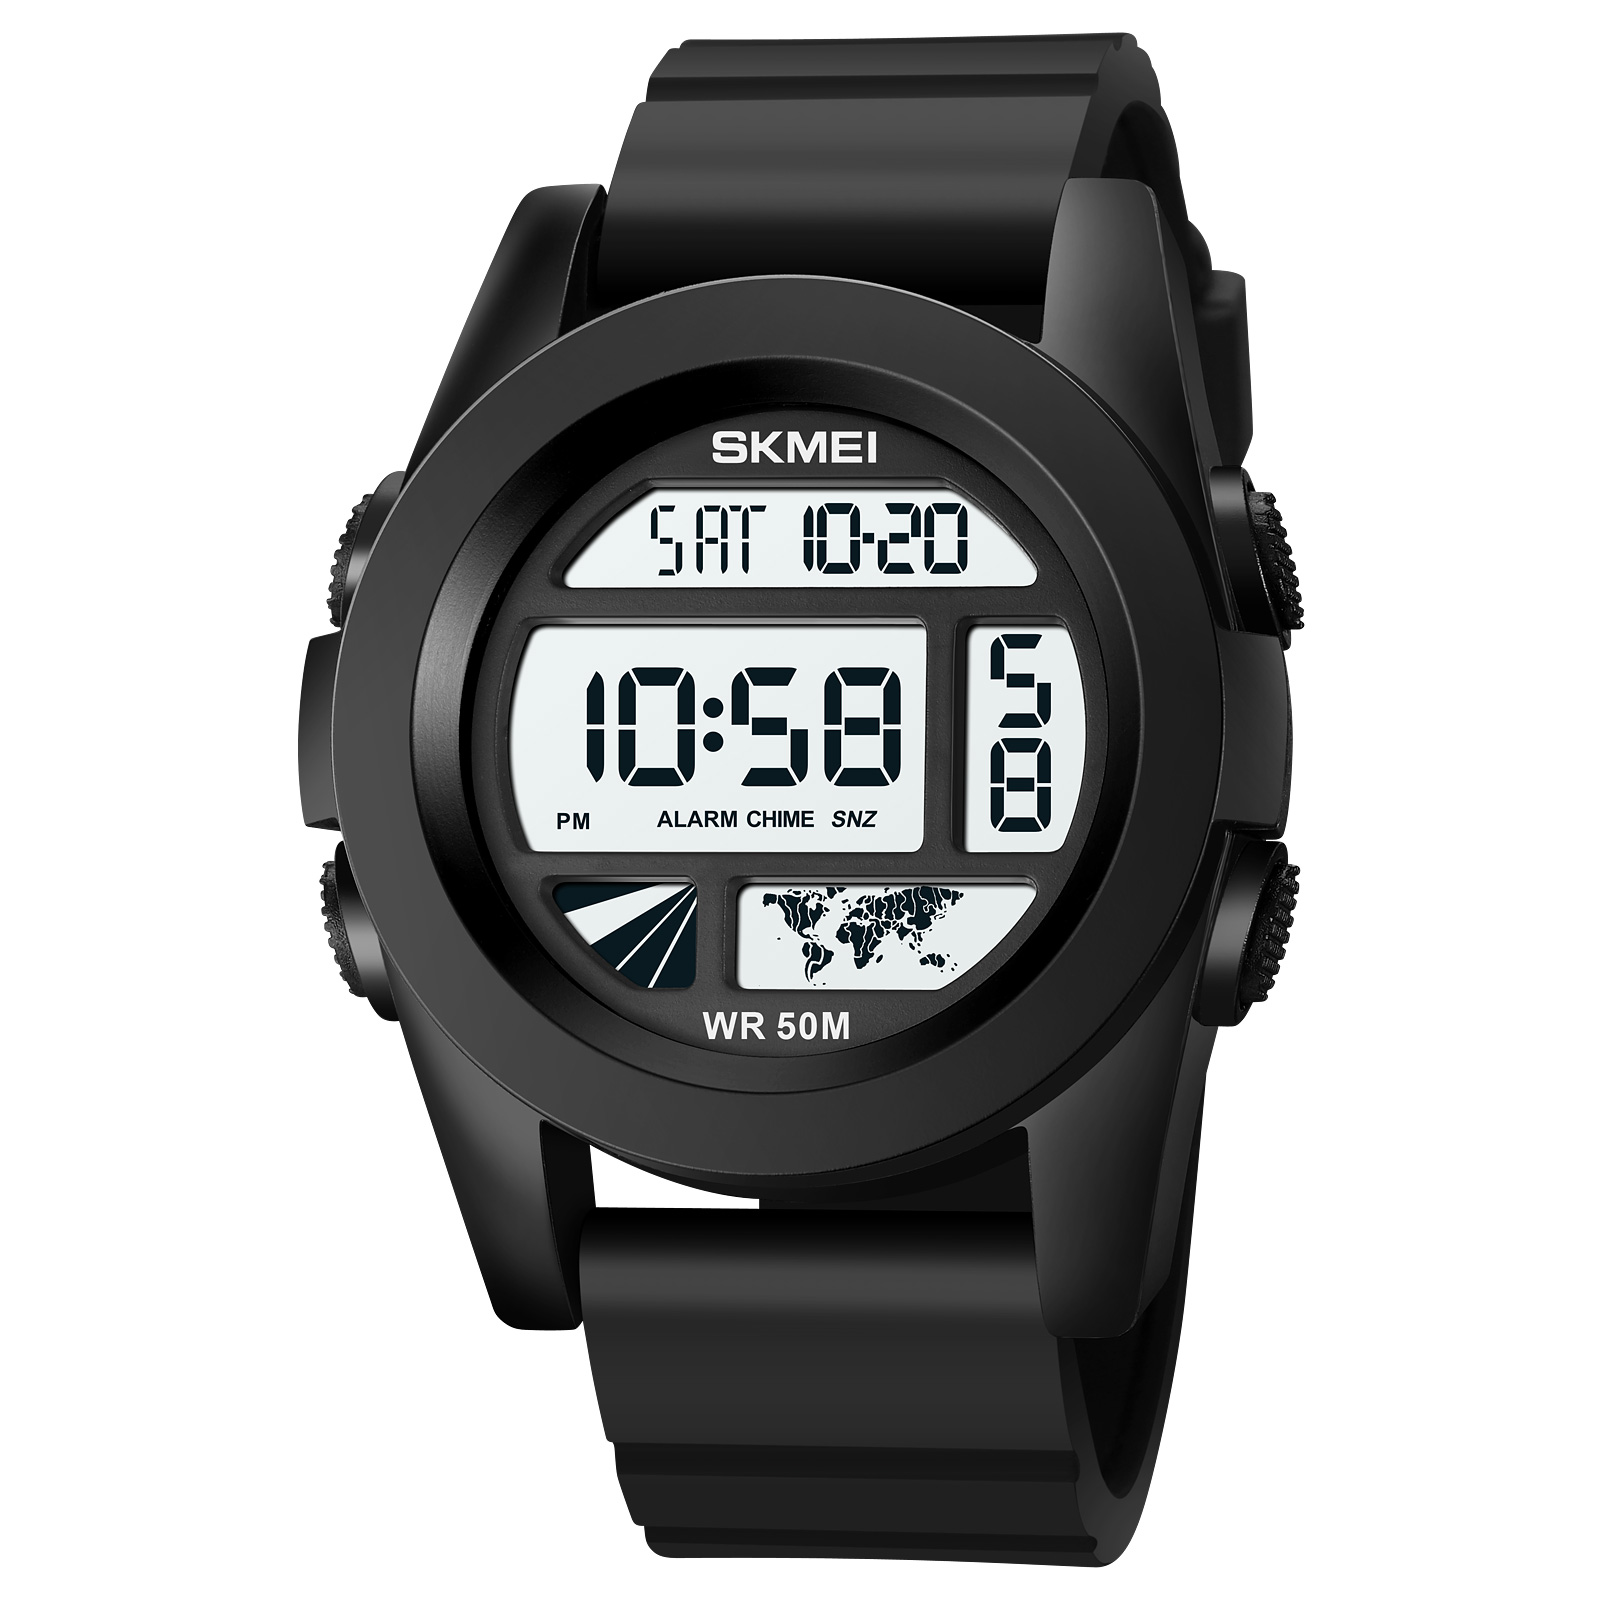 waterproof watches-Skmei Watch Manufacture Co.,Ltd